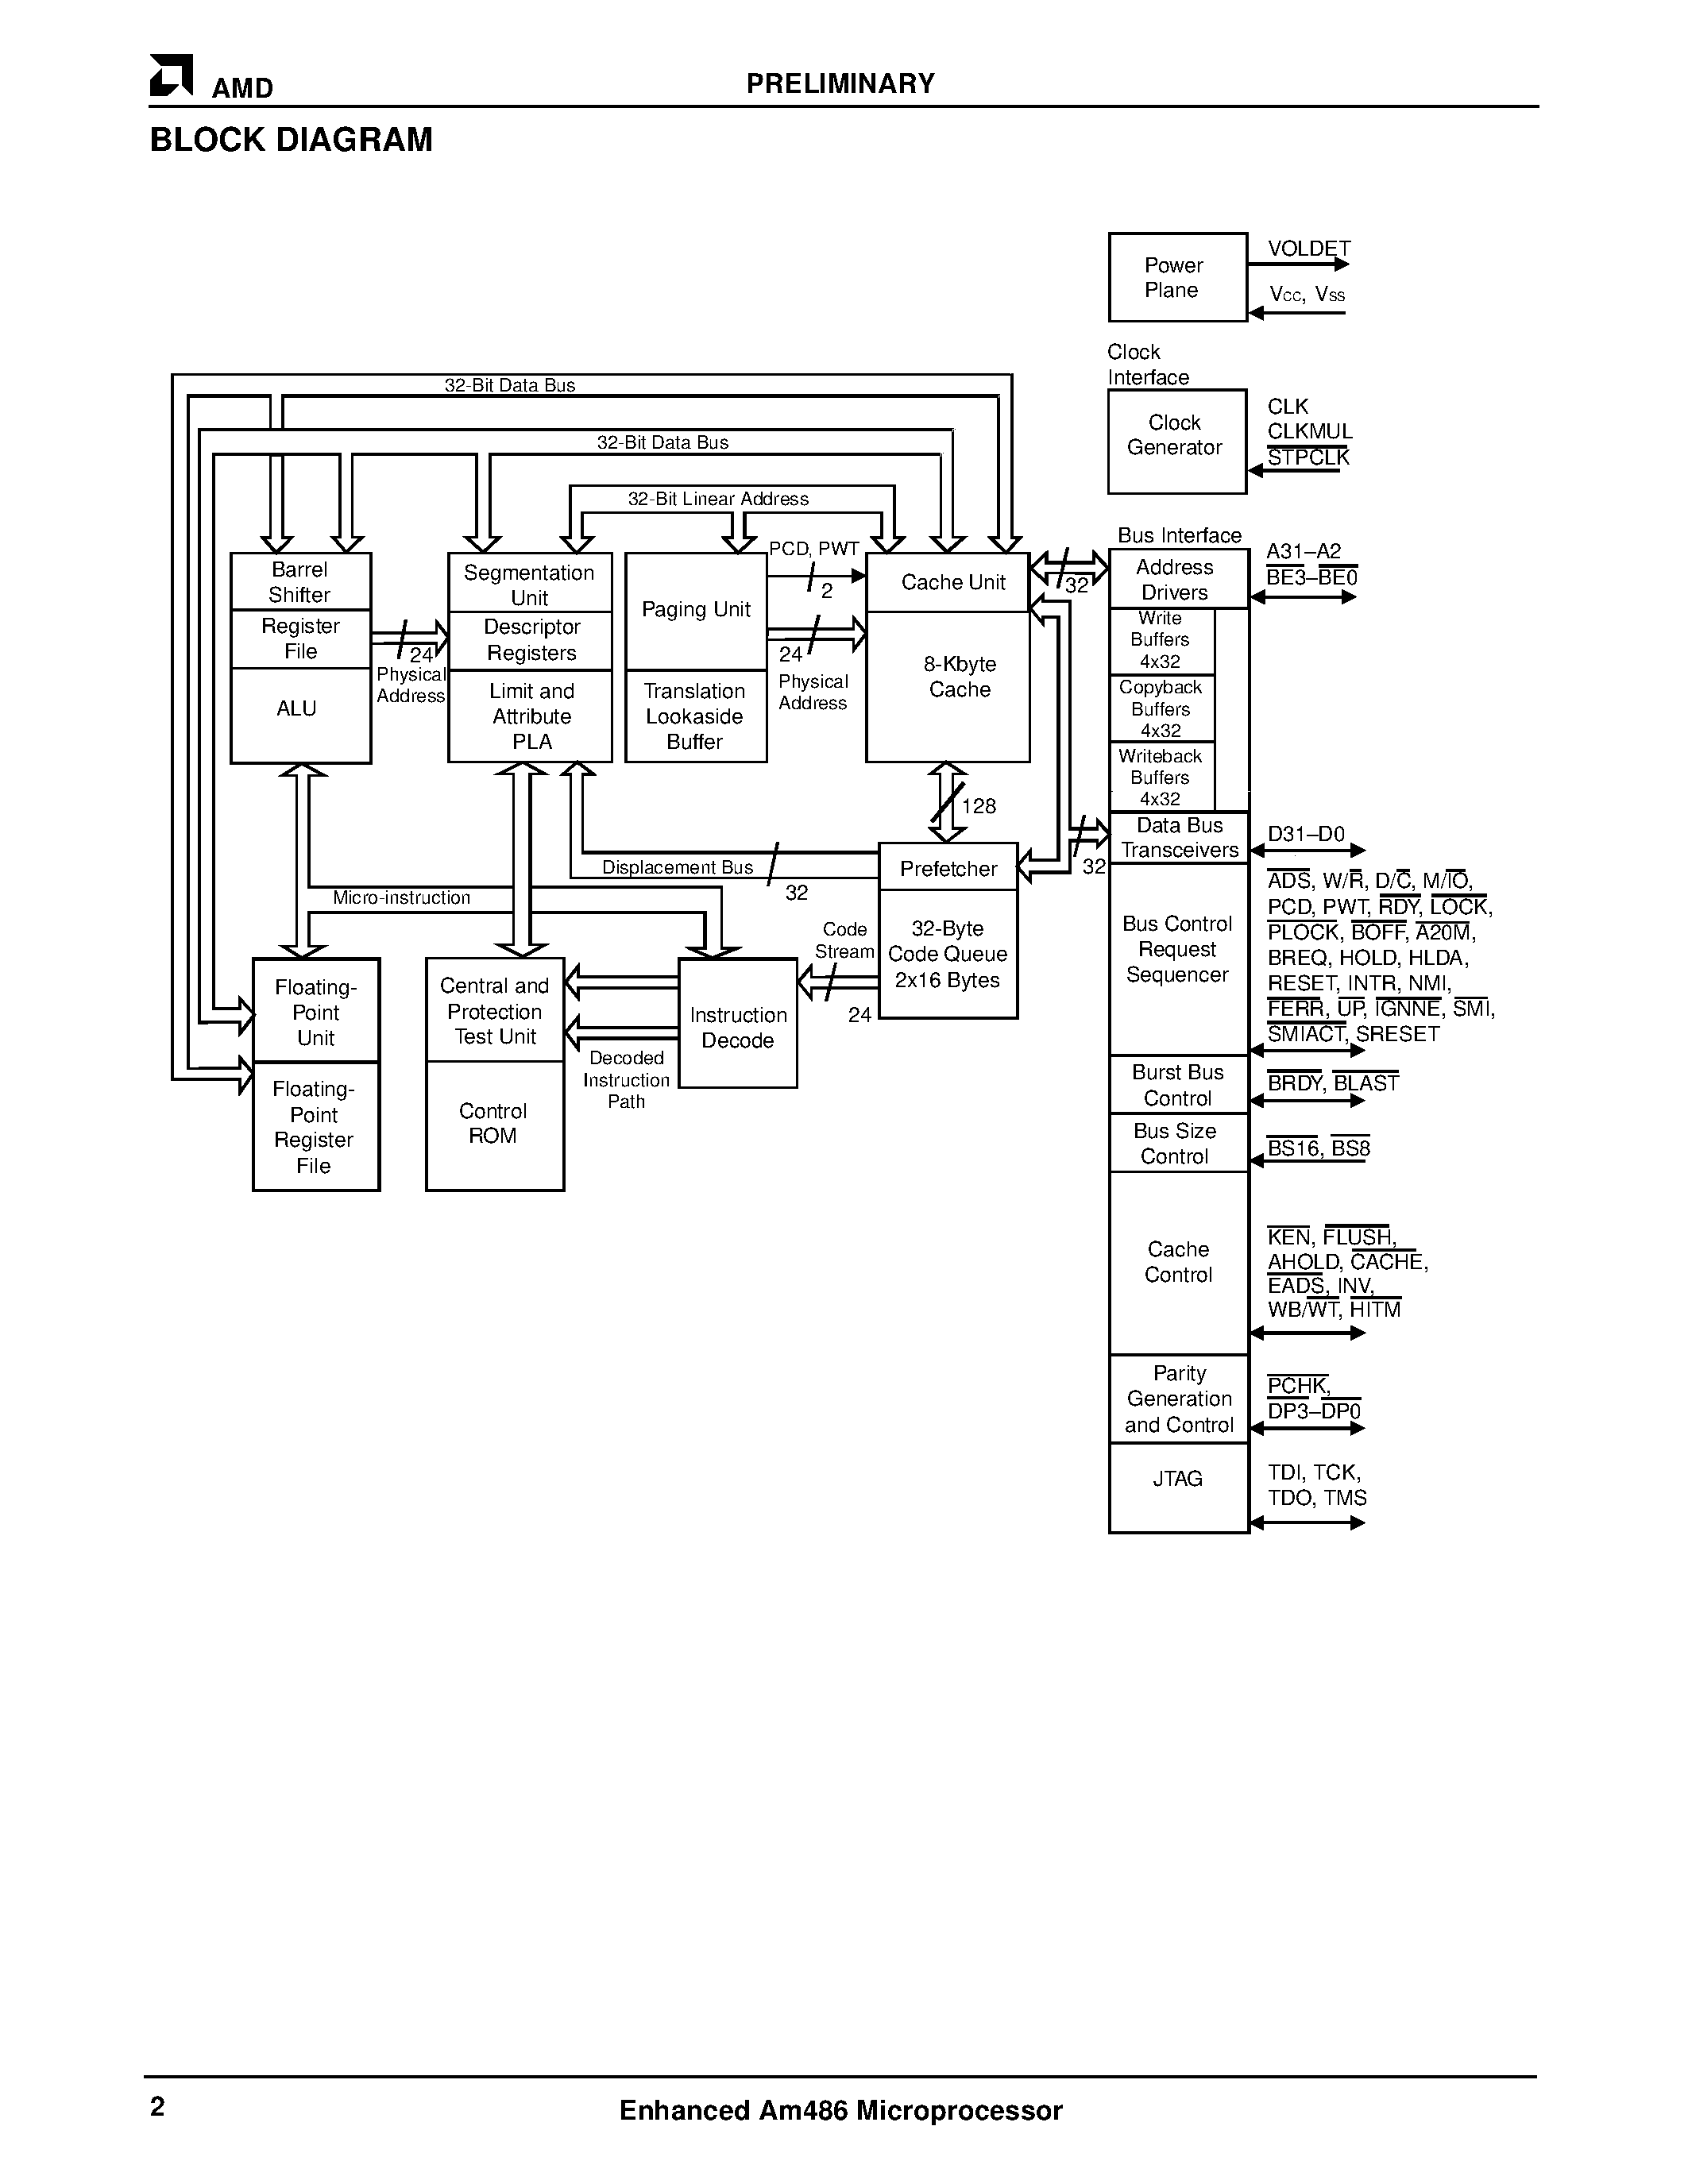 Datasheet AM486 - Enhanced Microprocessor Family page 2